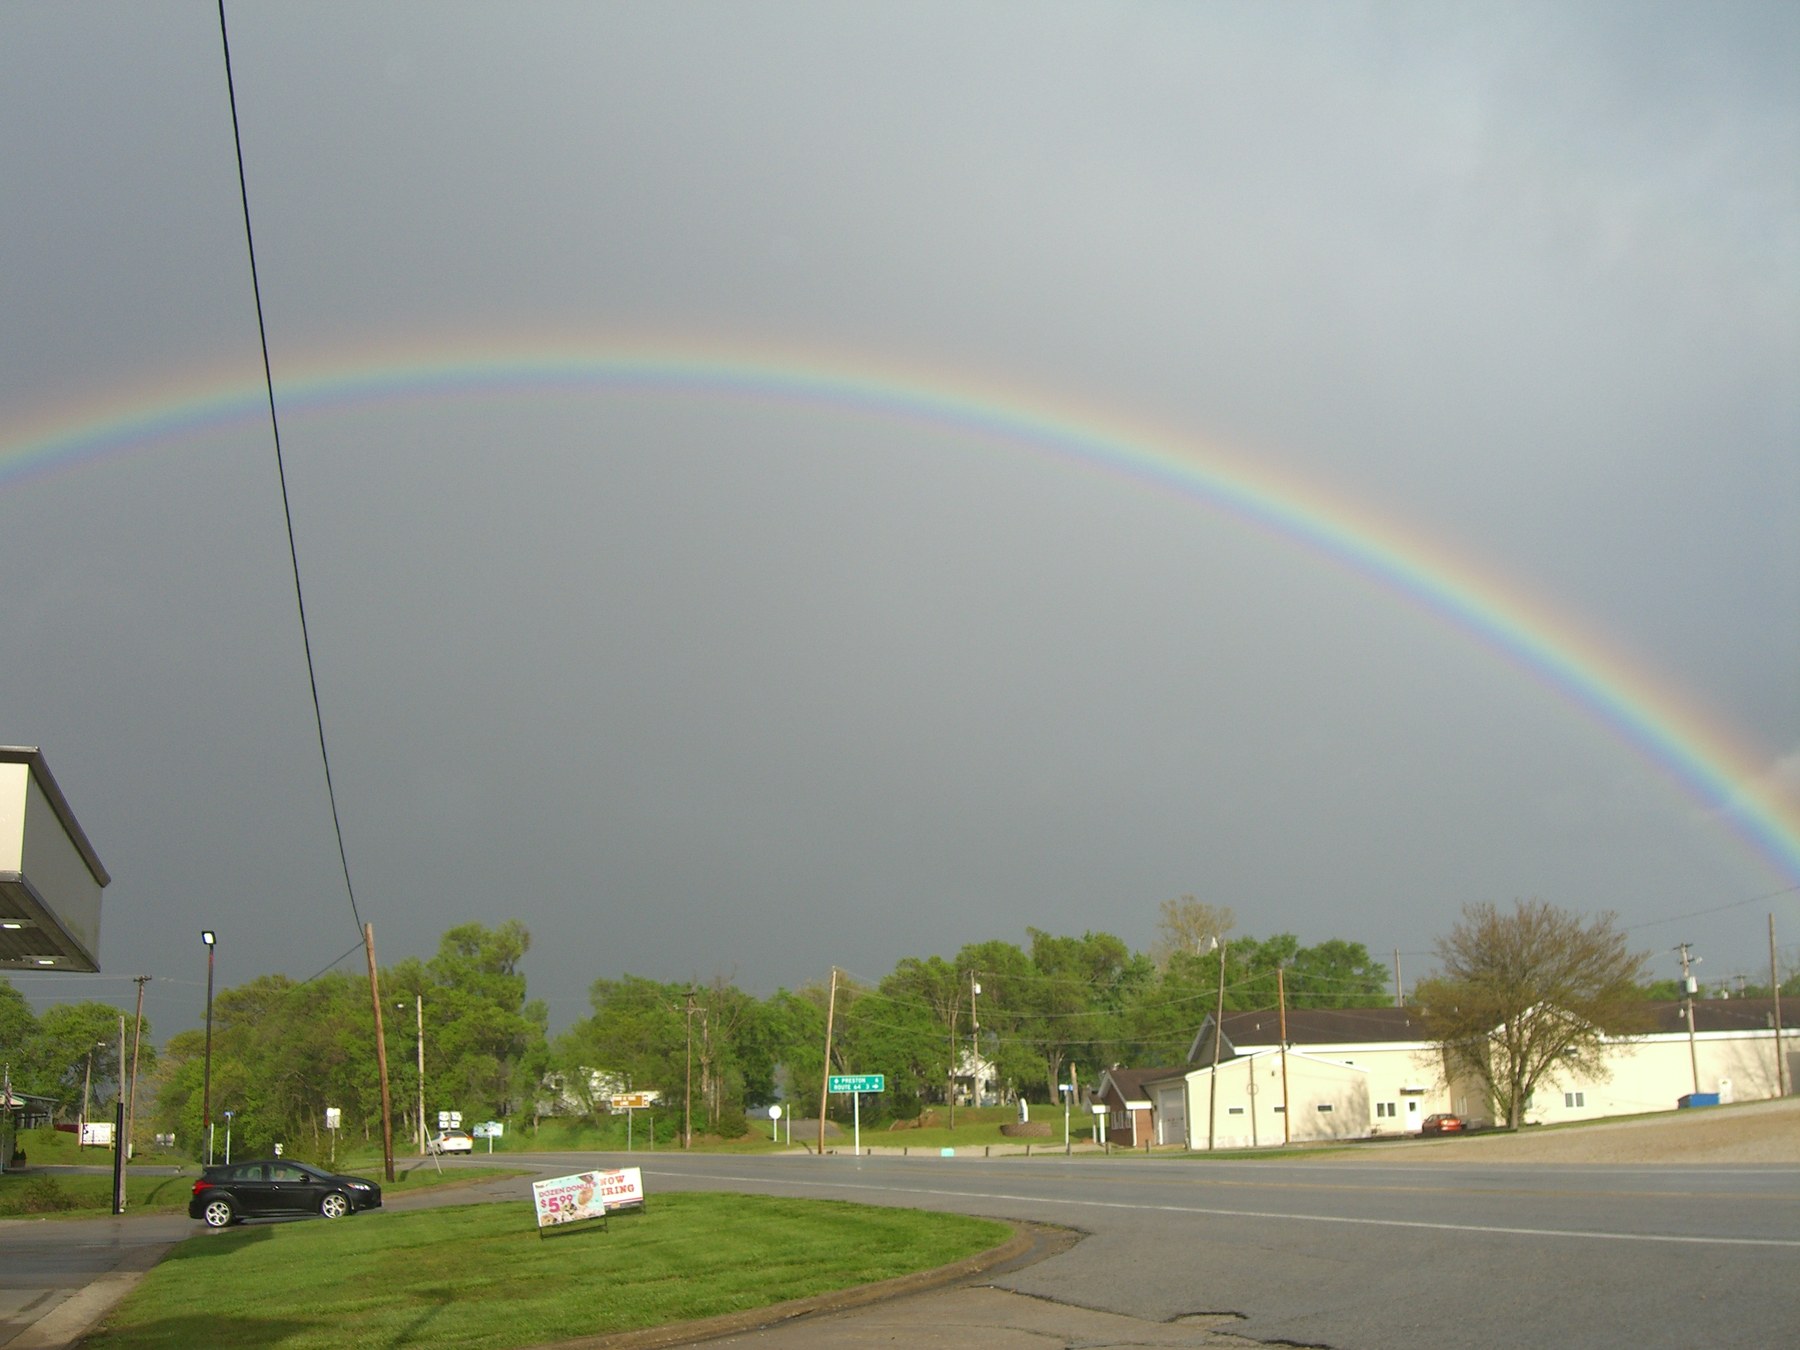 Bonus: On the way home, we saw the most amazing rainbow!!!